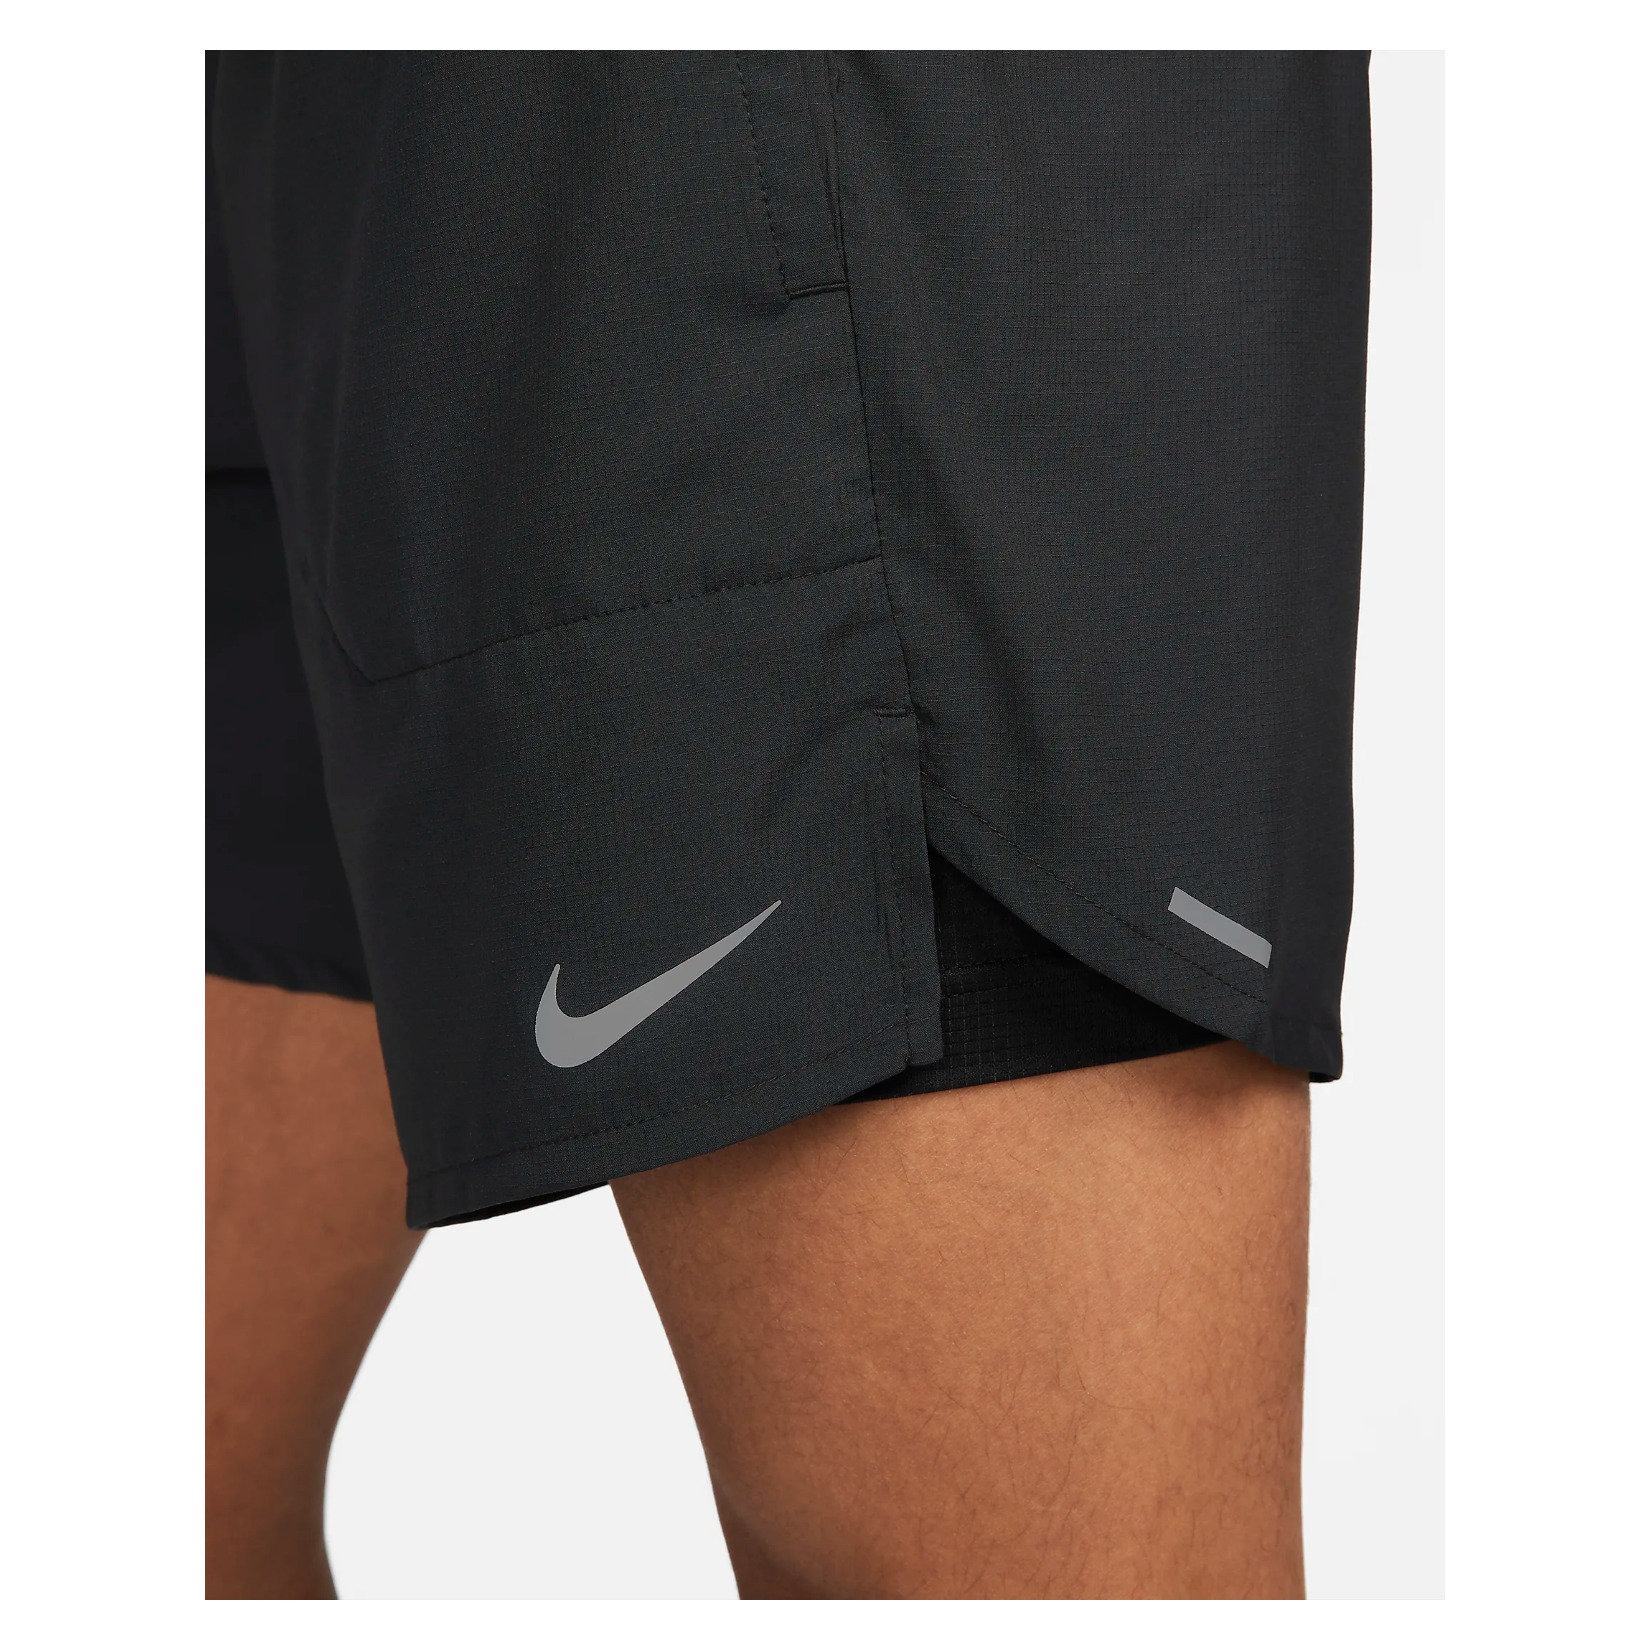 Nike Dri-FIT Stride 2-in-1 Running Shorts